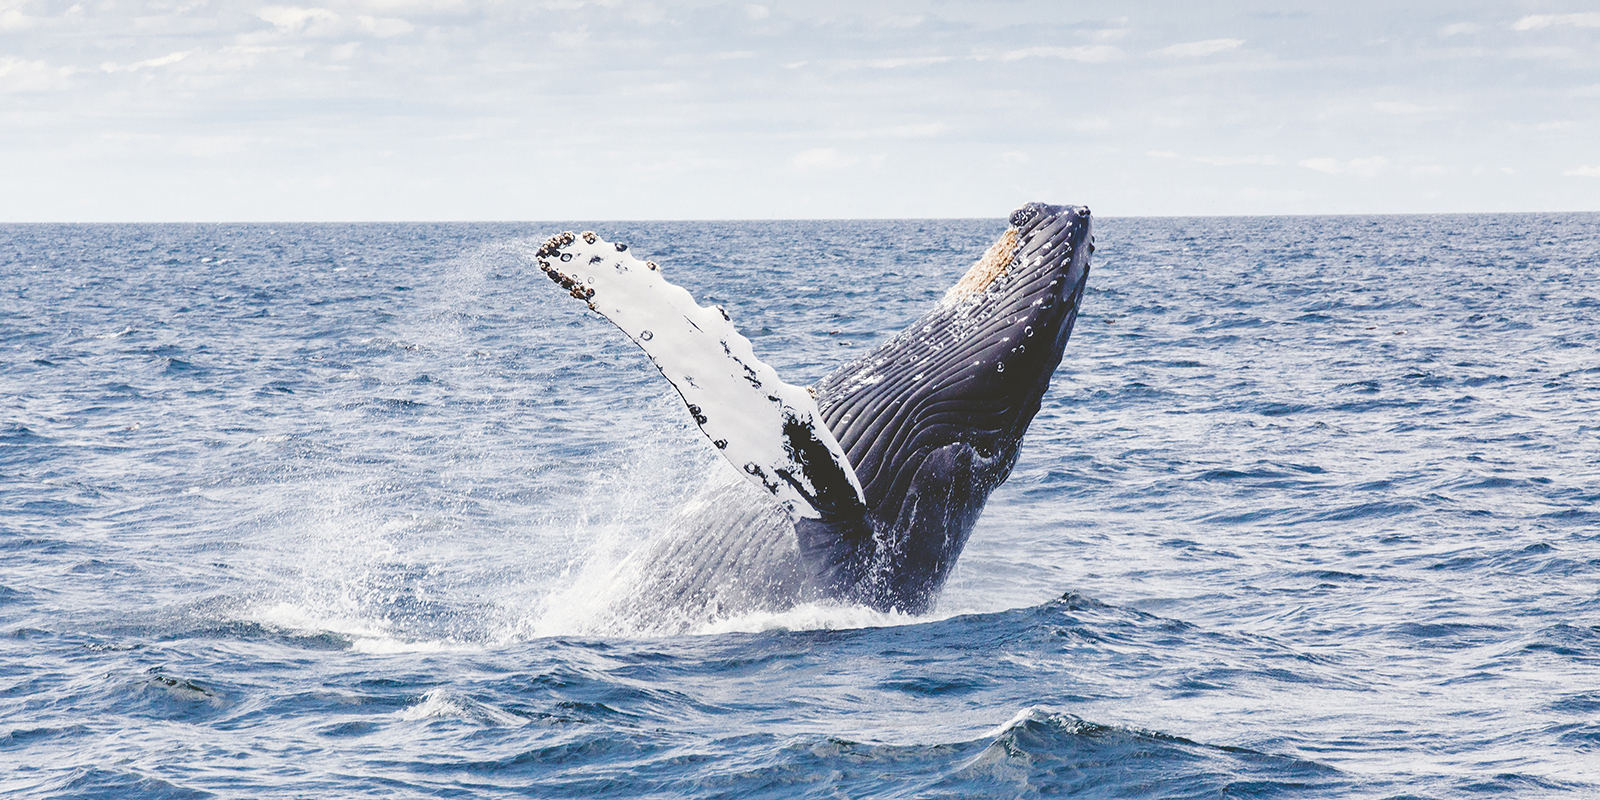 Humpback whale photo by Thomas Kelley on Unsplash